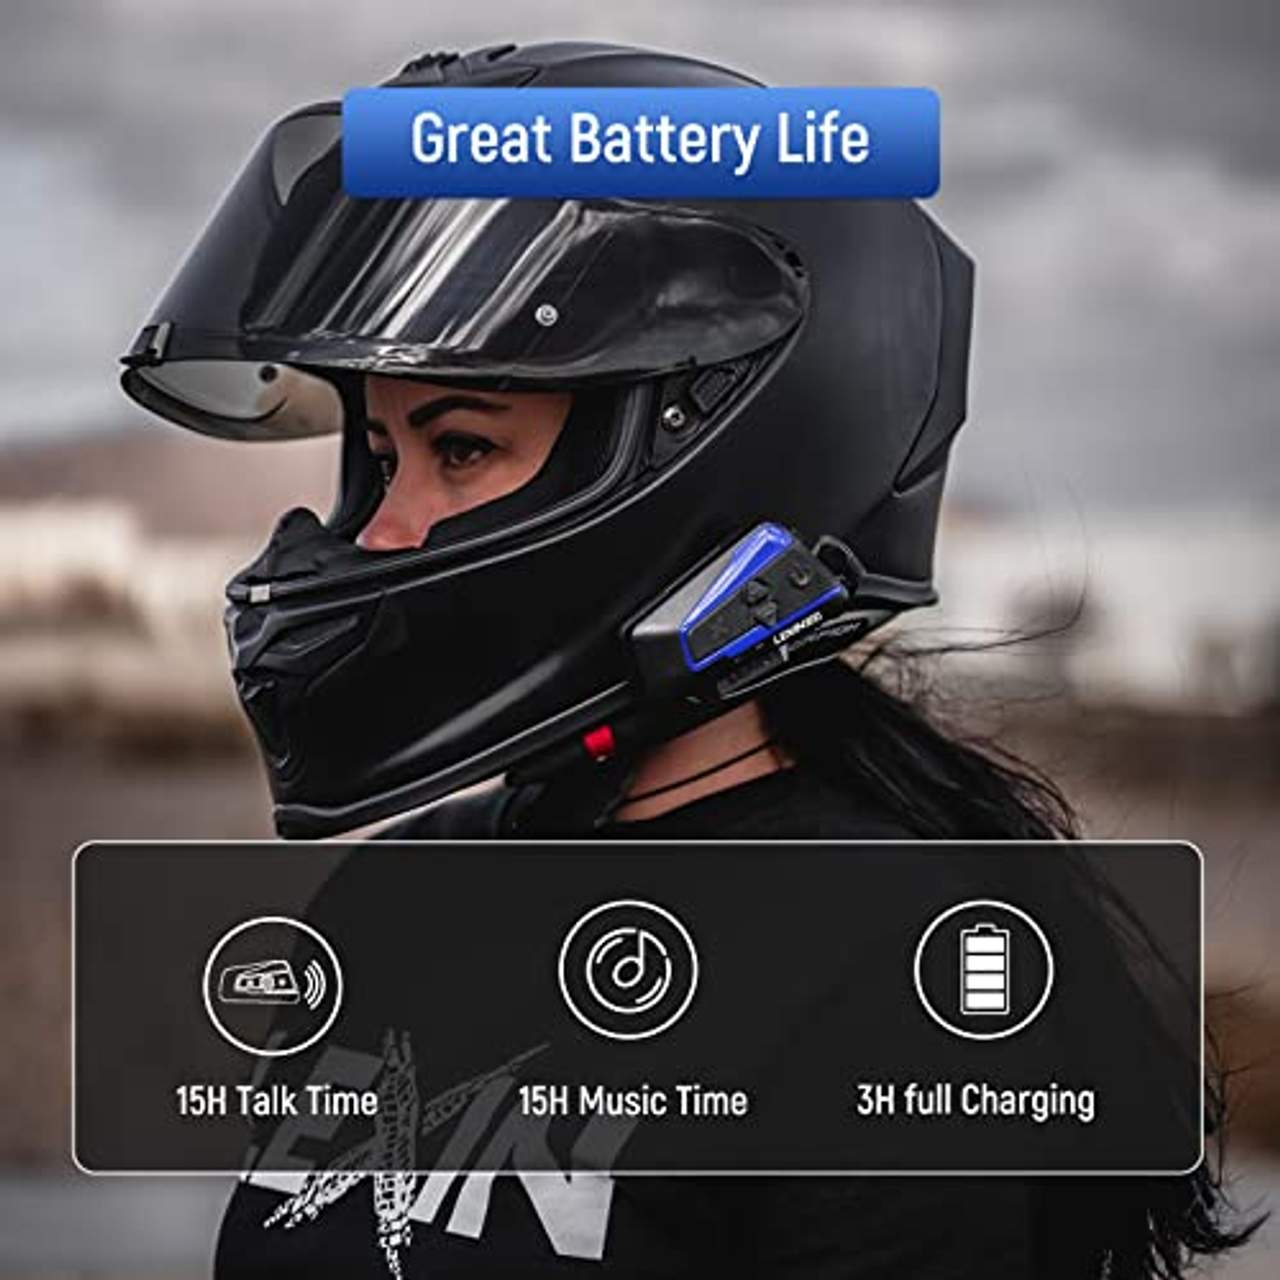 LEXIN B4FM Motorrad Bluetooth Headset 